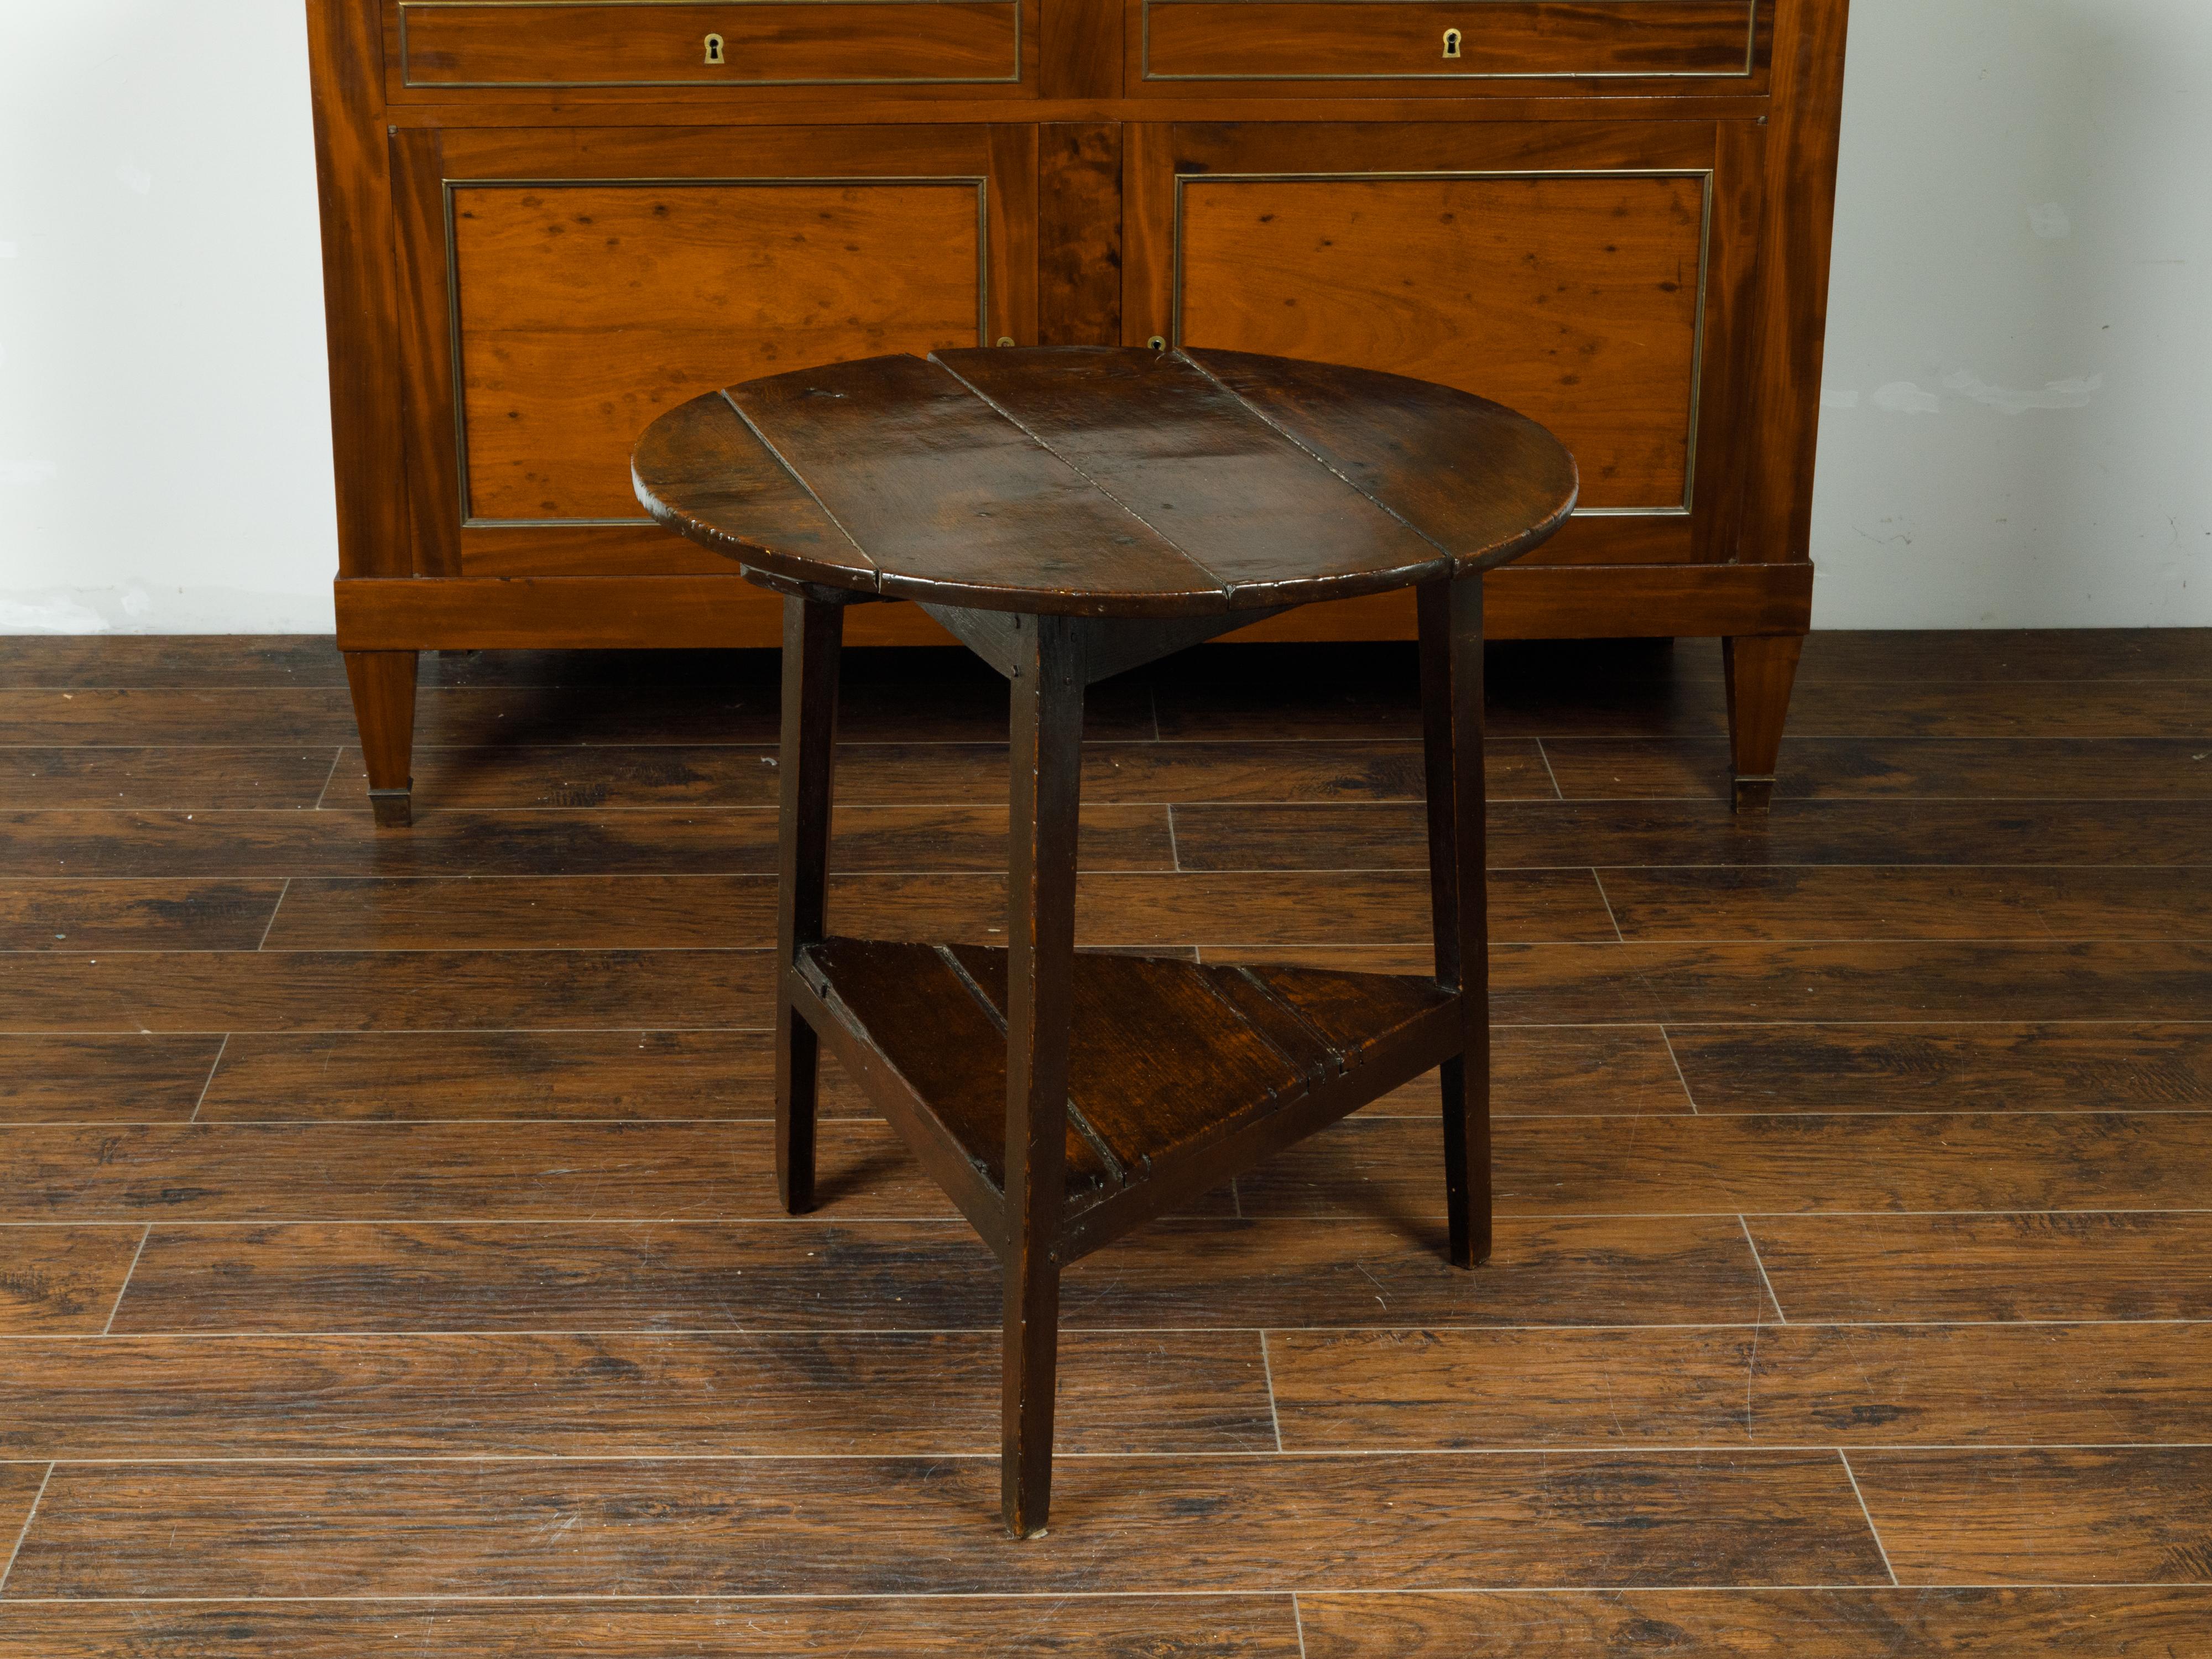 Rustic English 1800s Oak Cricket Table with Circular Top and Triangular Shelf